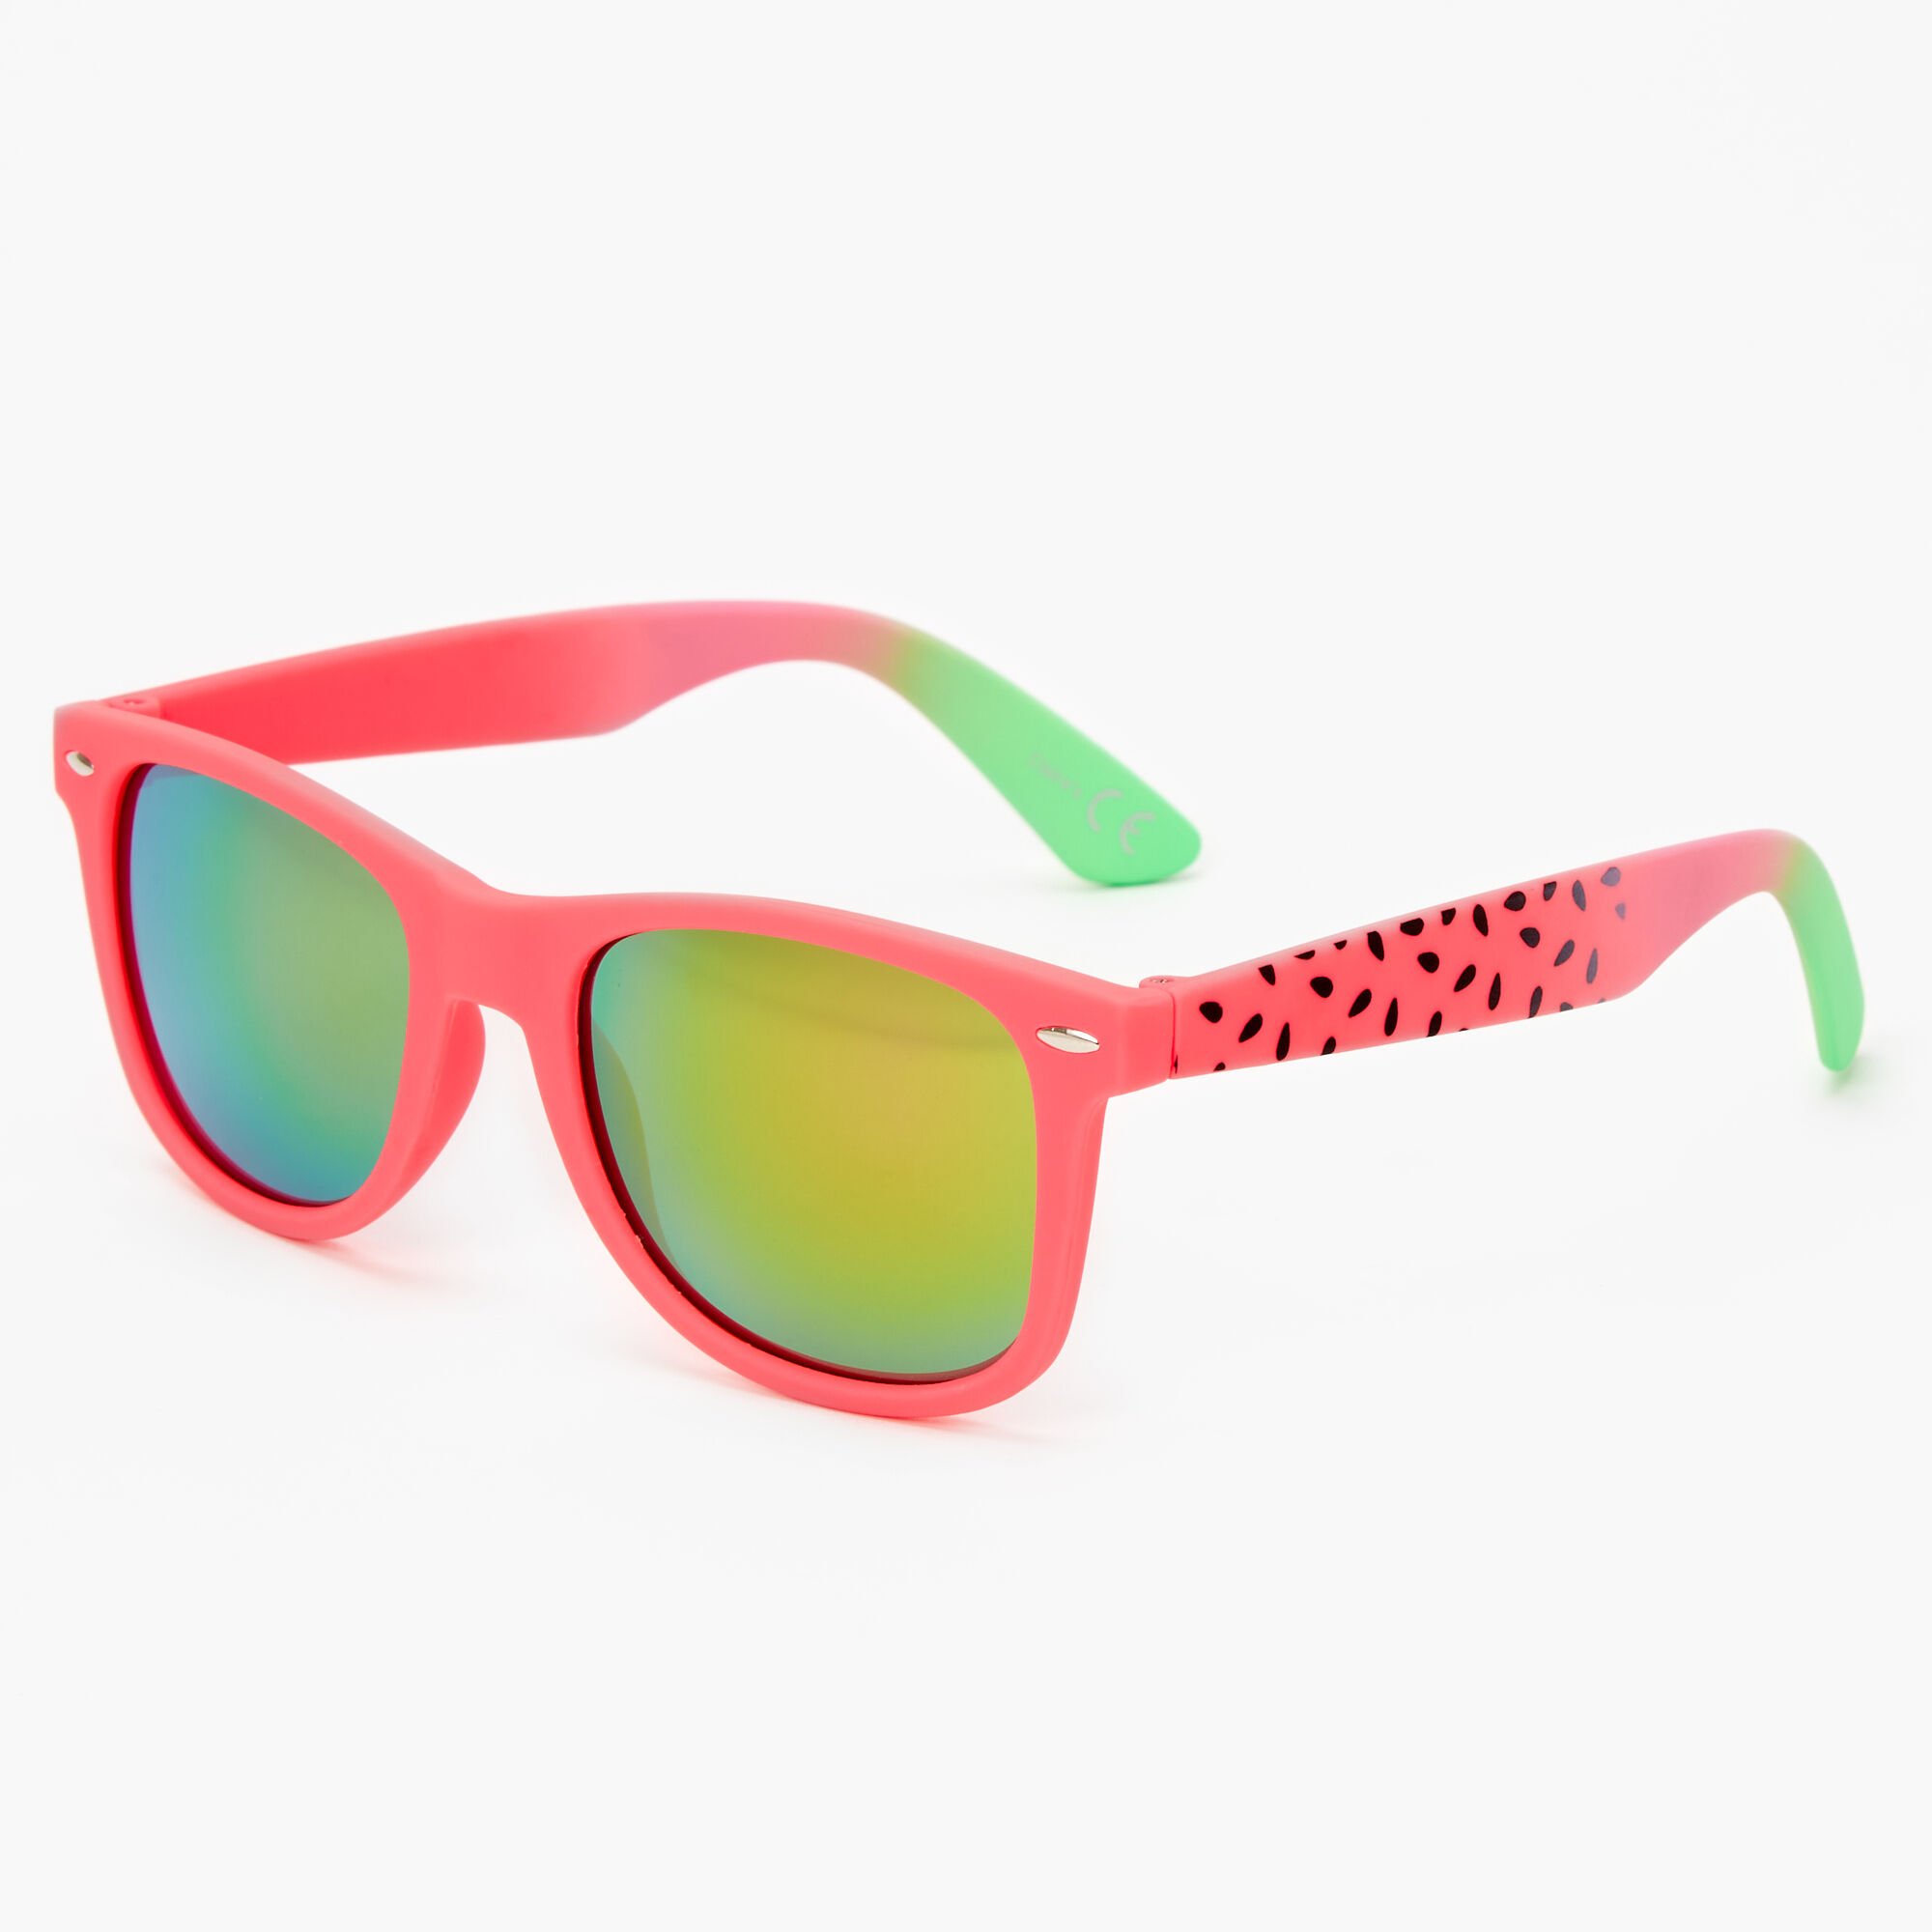 View Claires Watermelon Retro Sunglasses Rainbow information